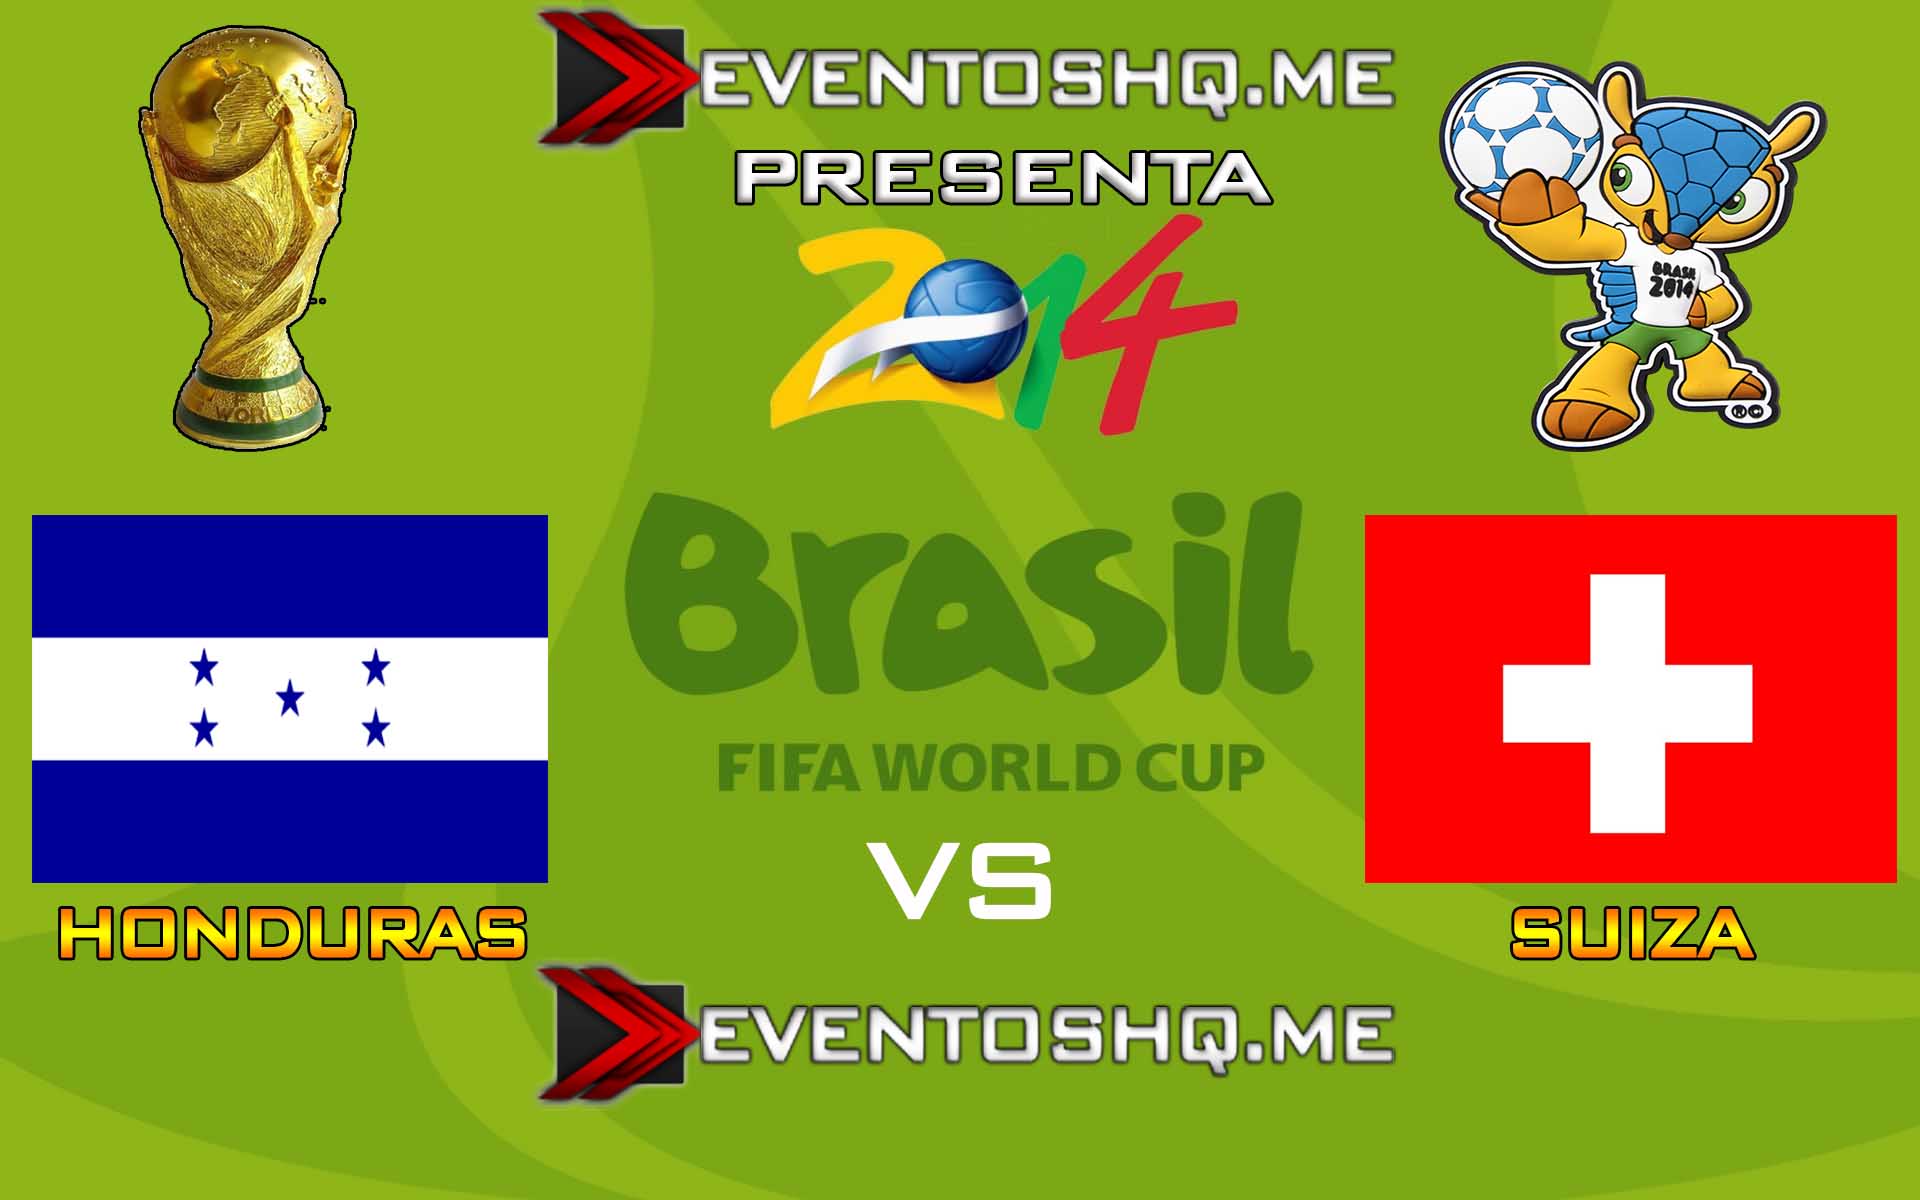 Ver en Vivo Honduras vs Suiza Mundial Brasil 2014 www.eventoshq.me